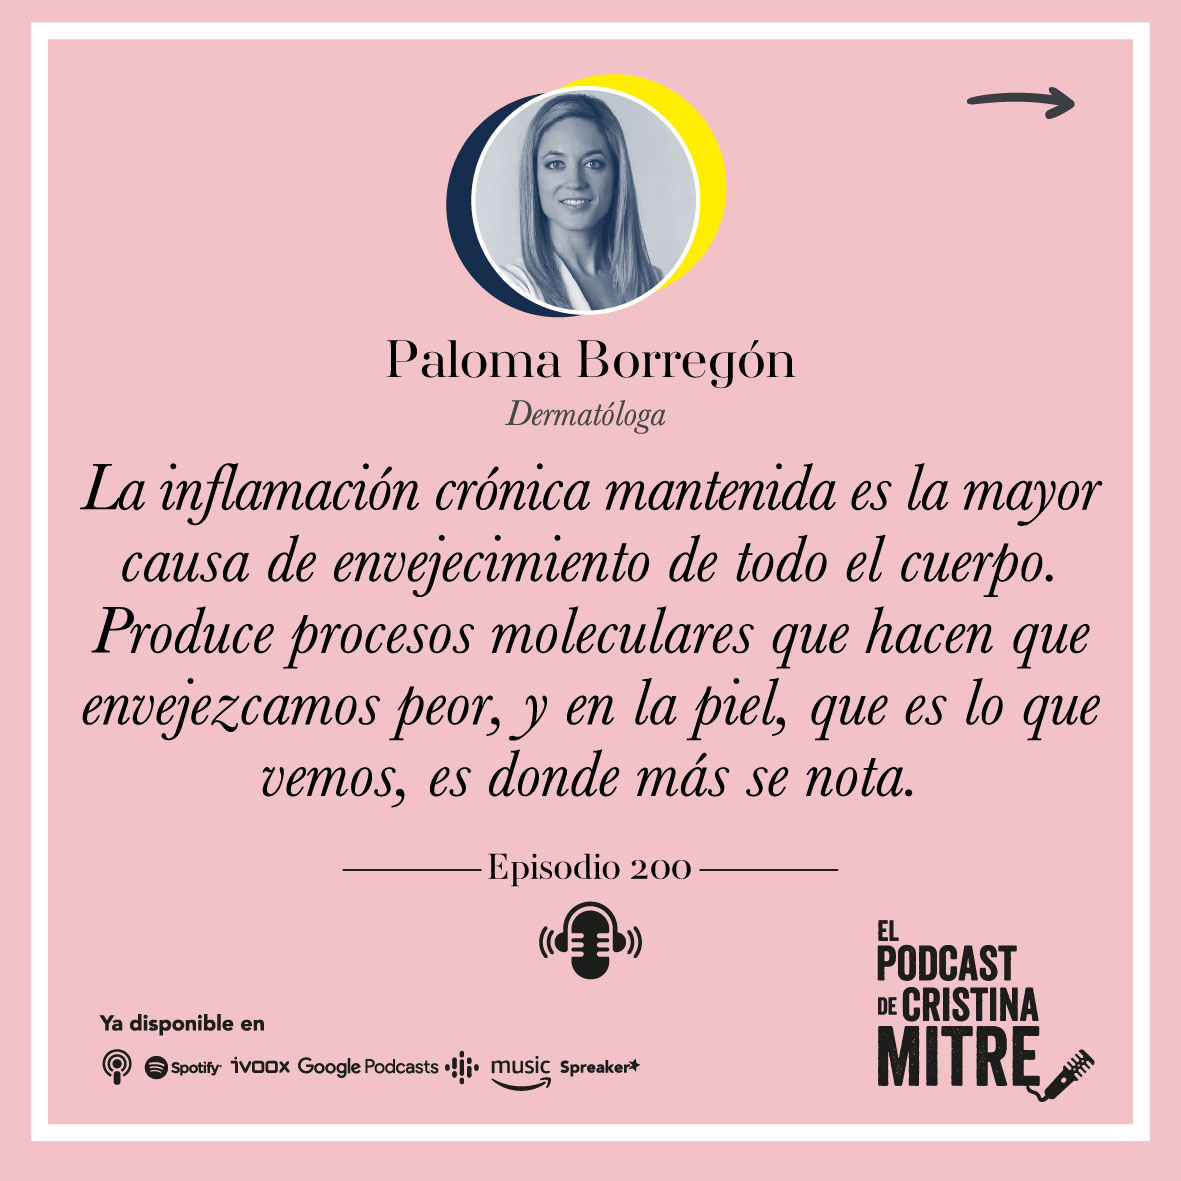 Podcast Cristina Mitre Paloma Borregon envejecimiento piel